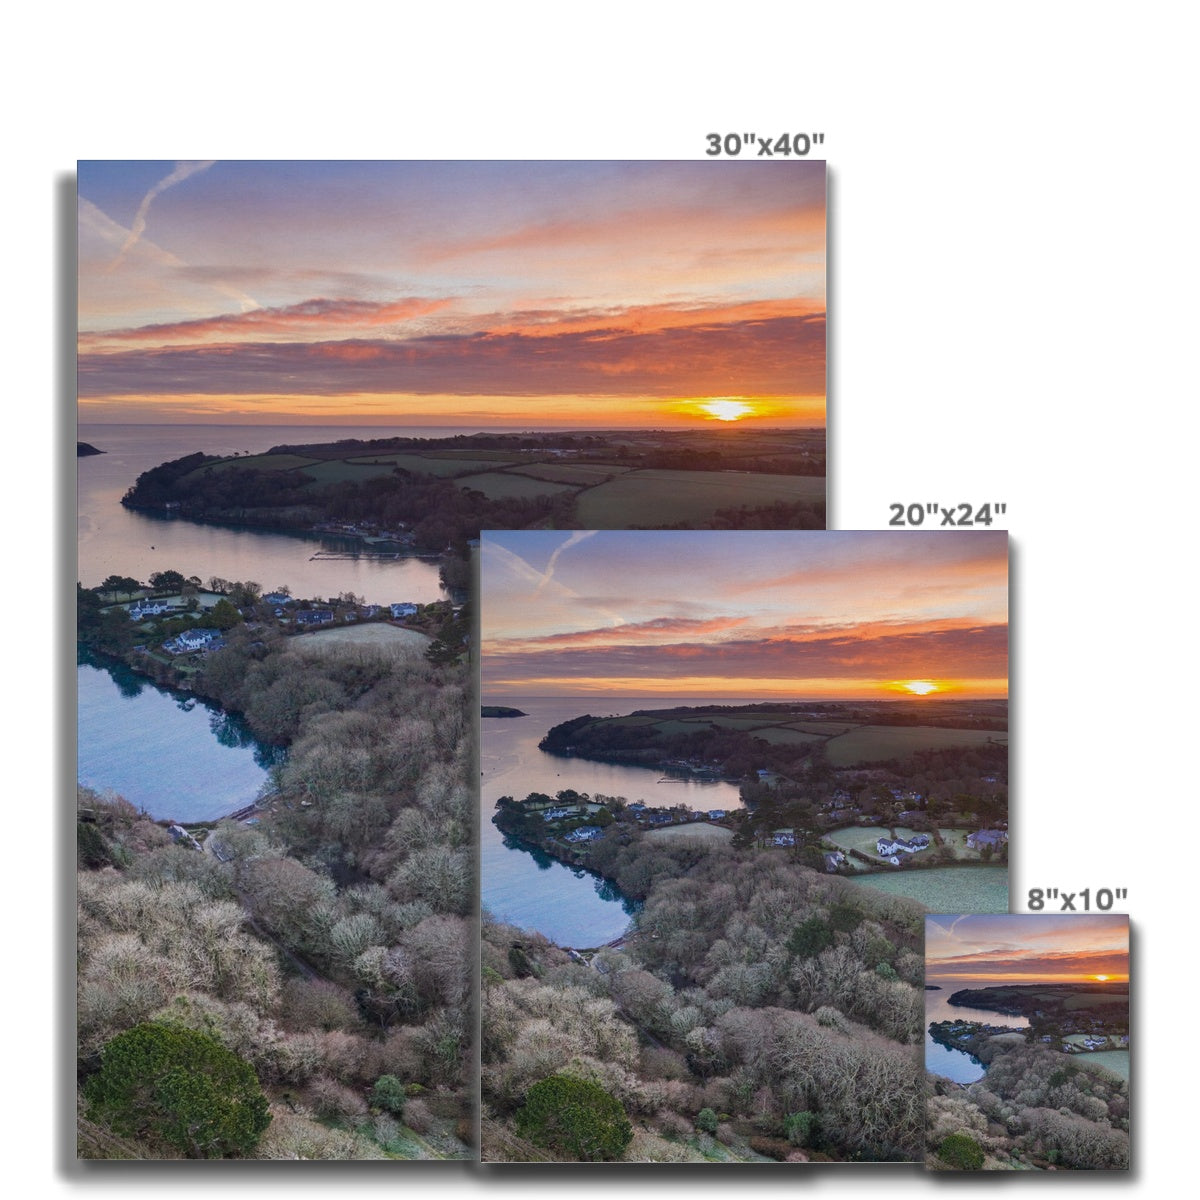 frenchmans creek sunrise canvas sizes